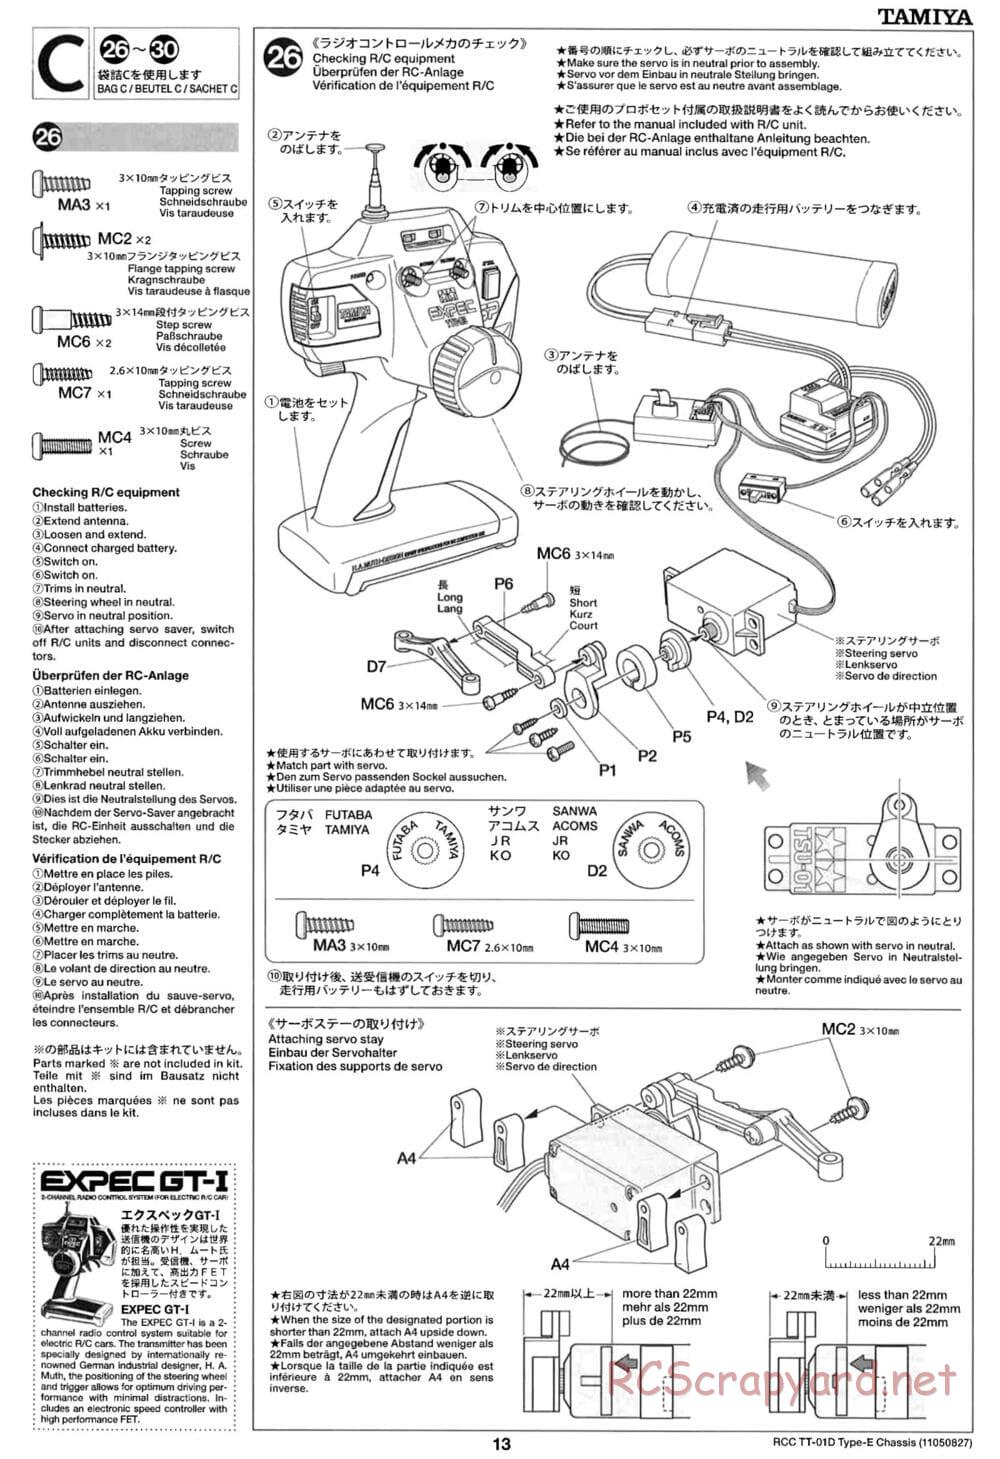 Tamiya - TT-01D Type-E (TT-01ED) - Drift Spec Chassis - Manual - Page 13